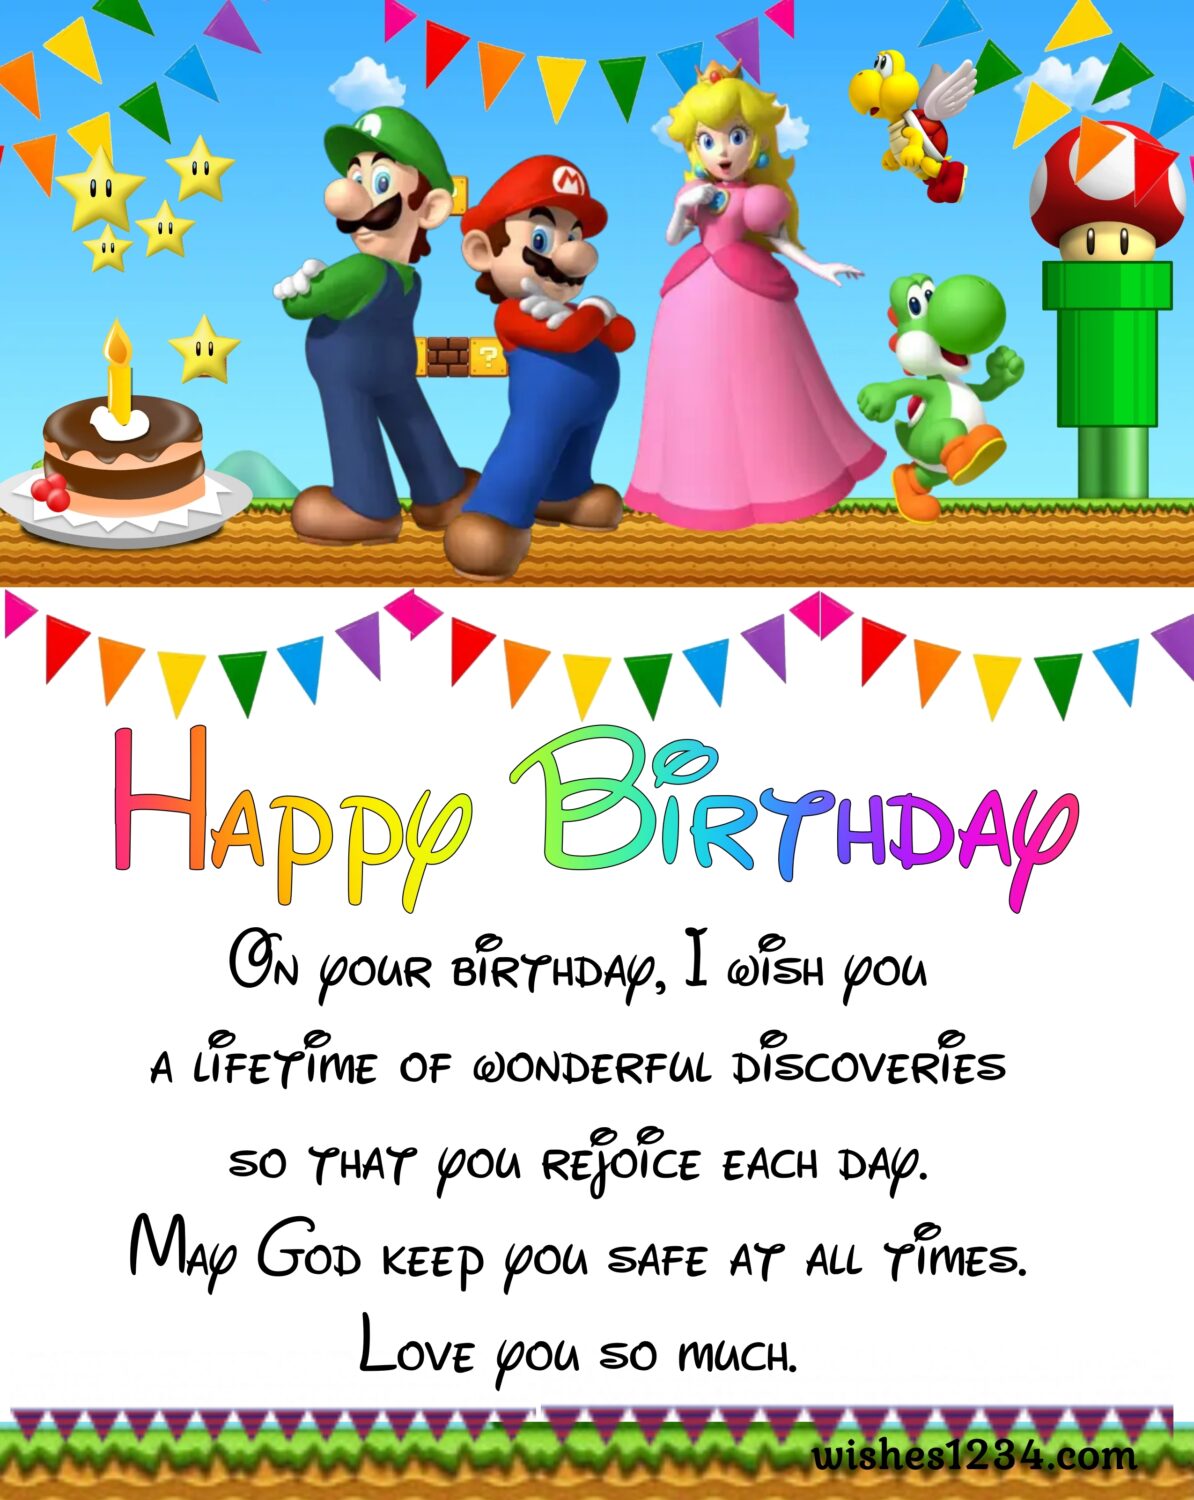 Mario Bros and cake for birthday, Kids birthday | Happy Birthday wishes for kids.